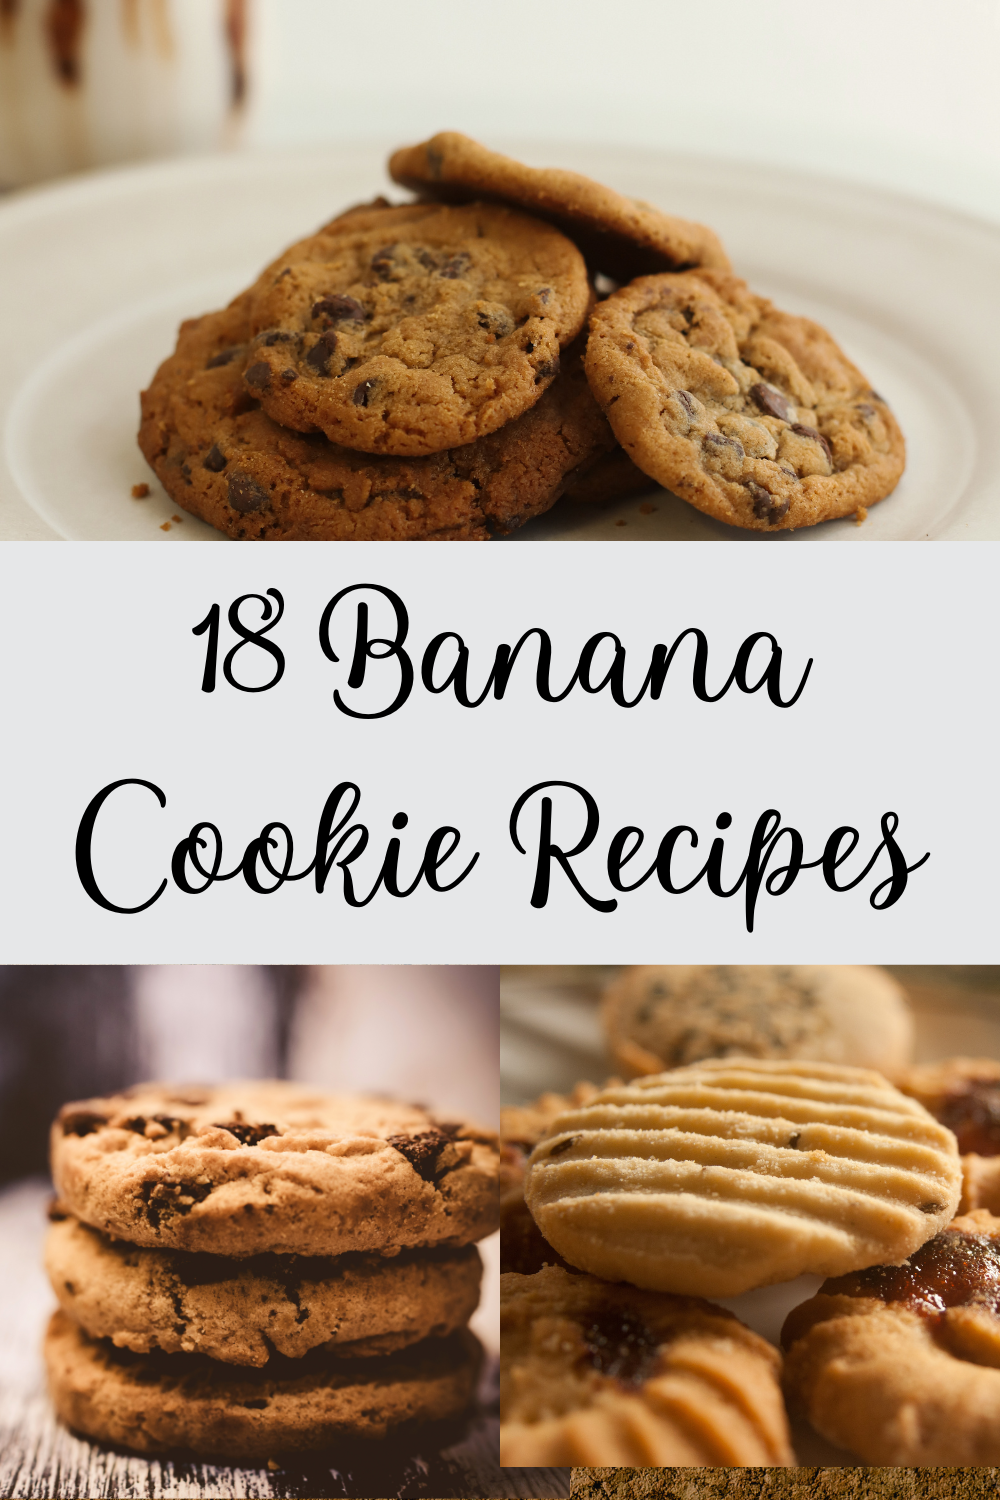 Banana Cookie Recipes